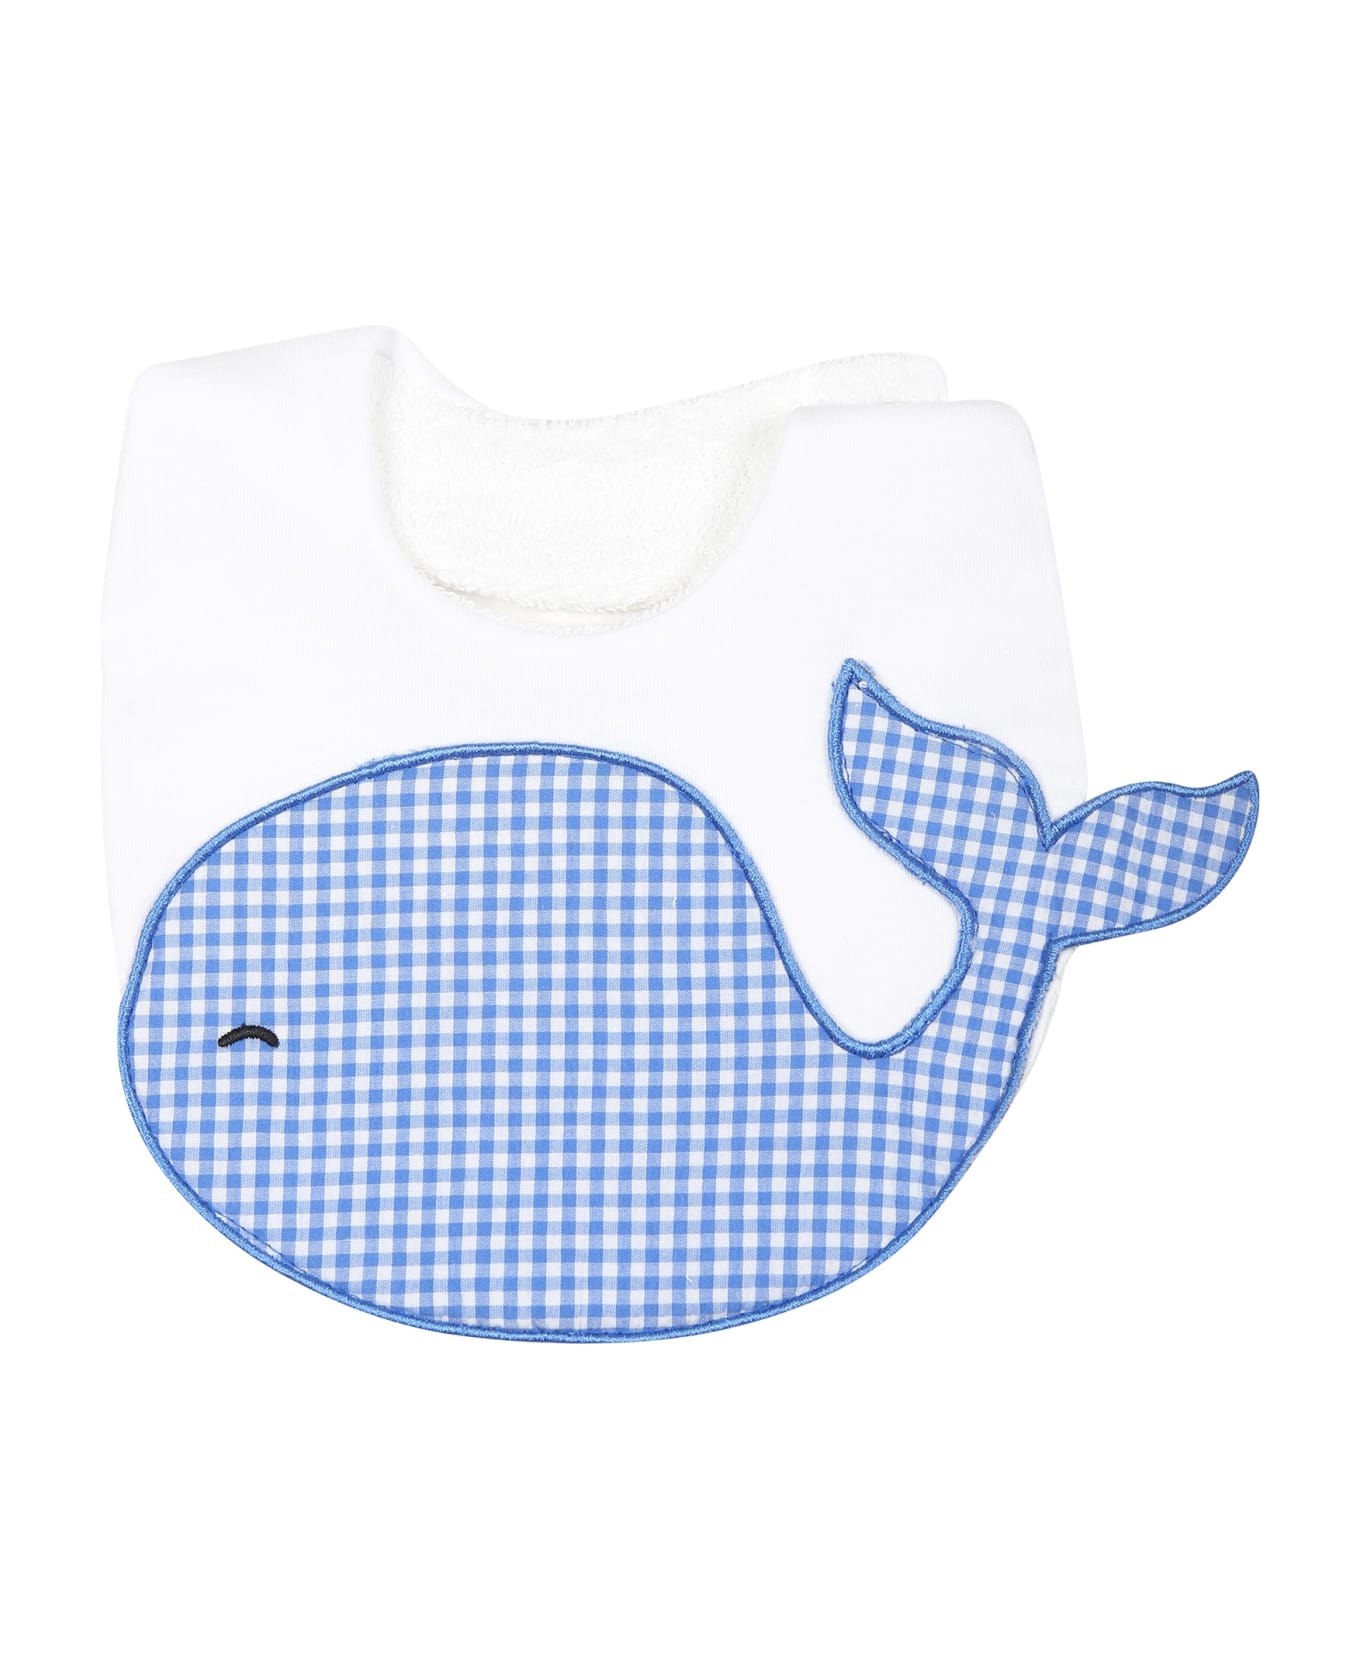 Monnalisa White Bib For Baby Boy With Whale - White